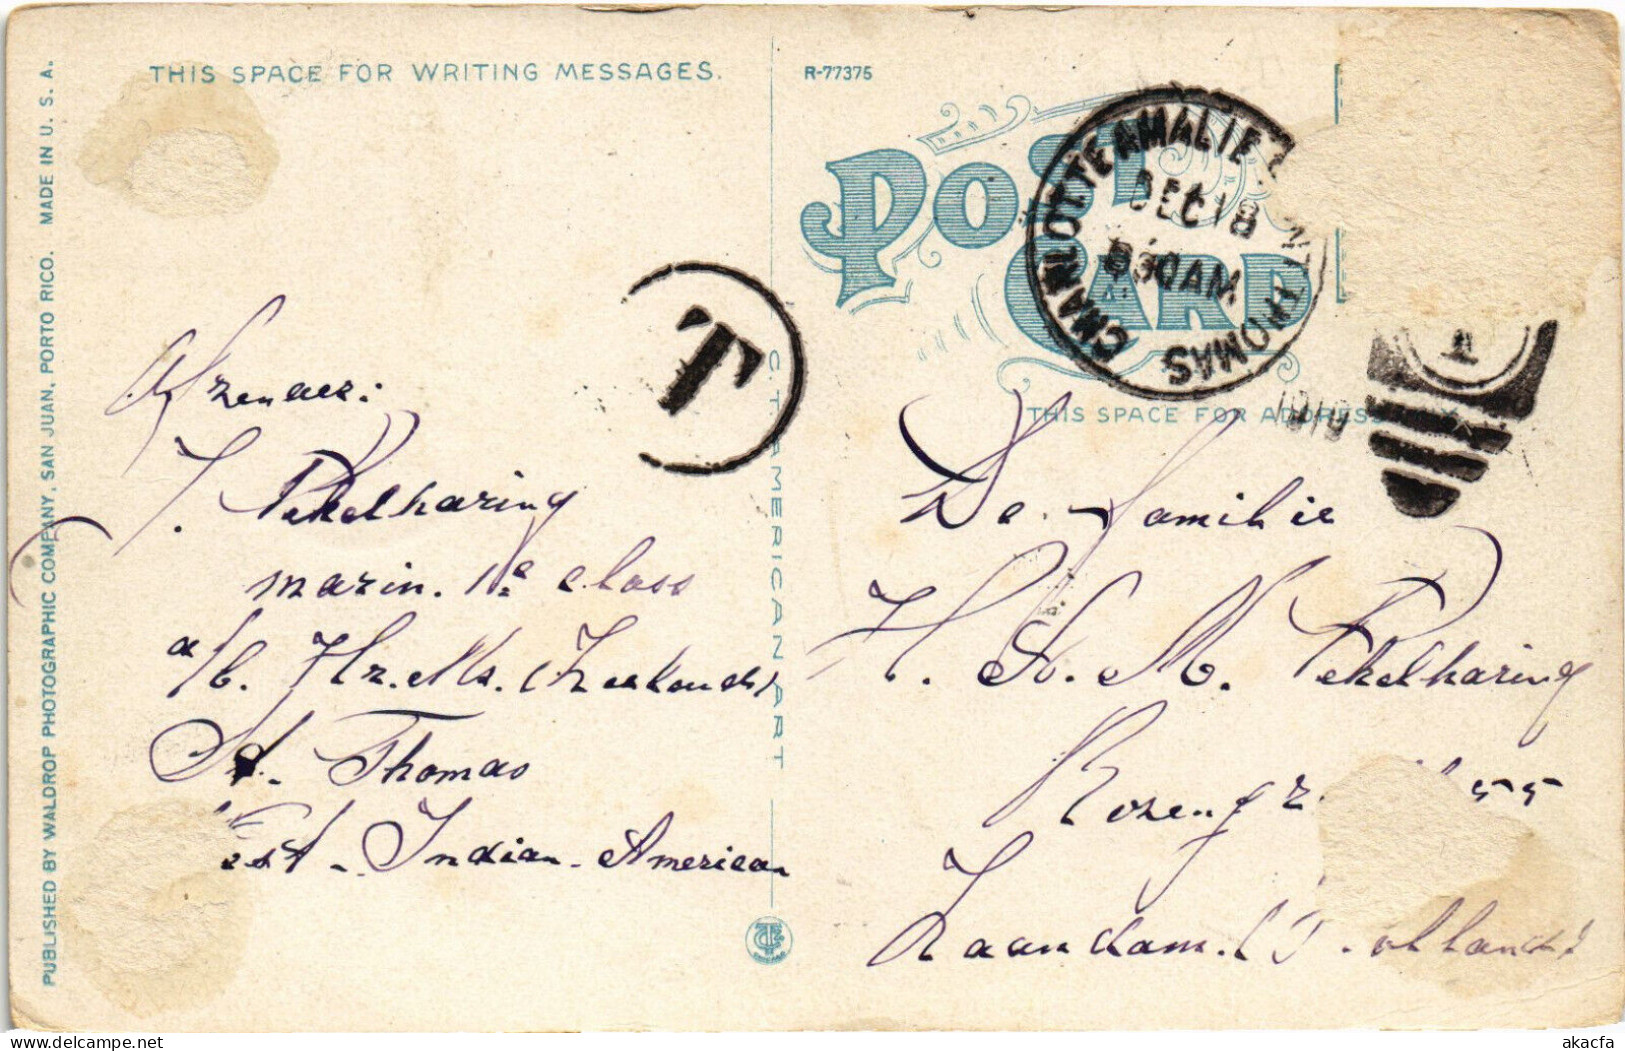 PC VIRGIN ISLANDS ST. THOMAS EAST OF CITY AND HARBOUR Vintage Postcard (b52264) - Virgin Islands, British